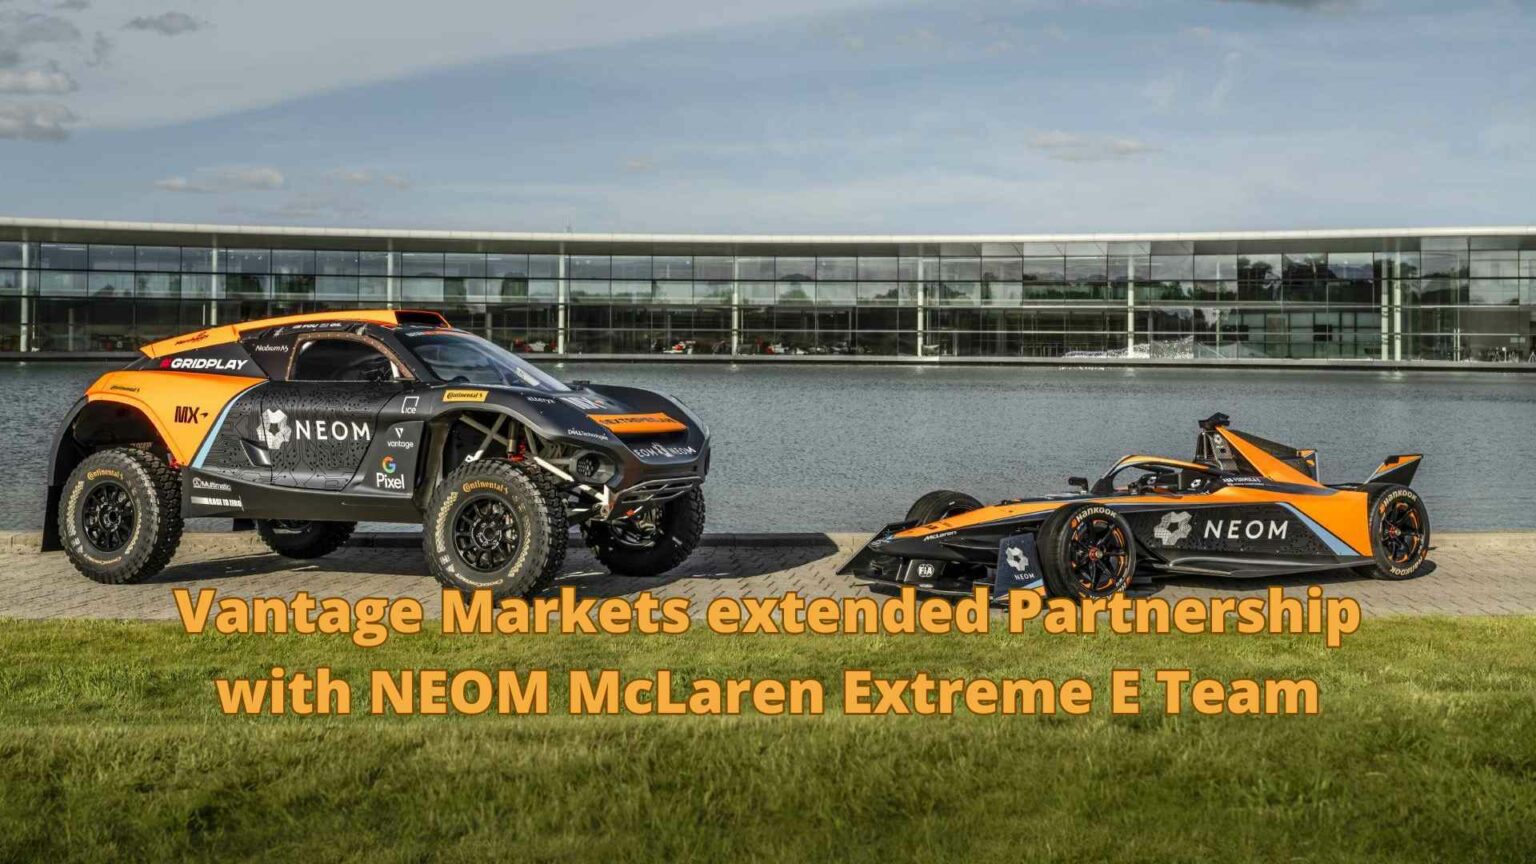 Vantage Markets extending partnership with NEOM McLaren Extreme E Team